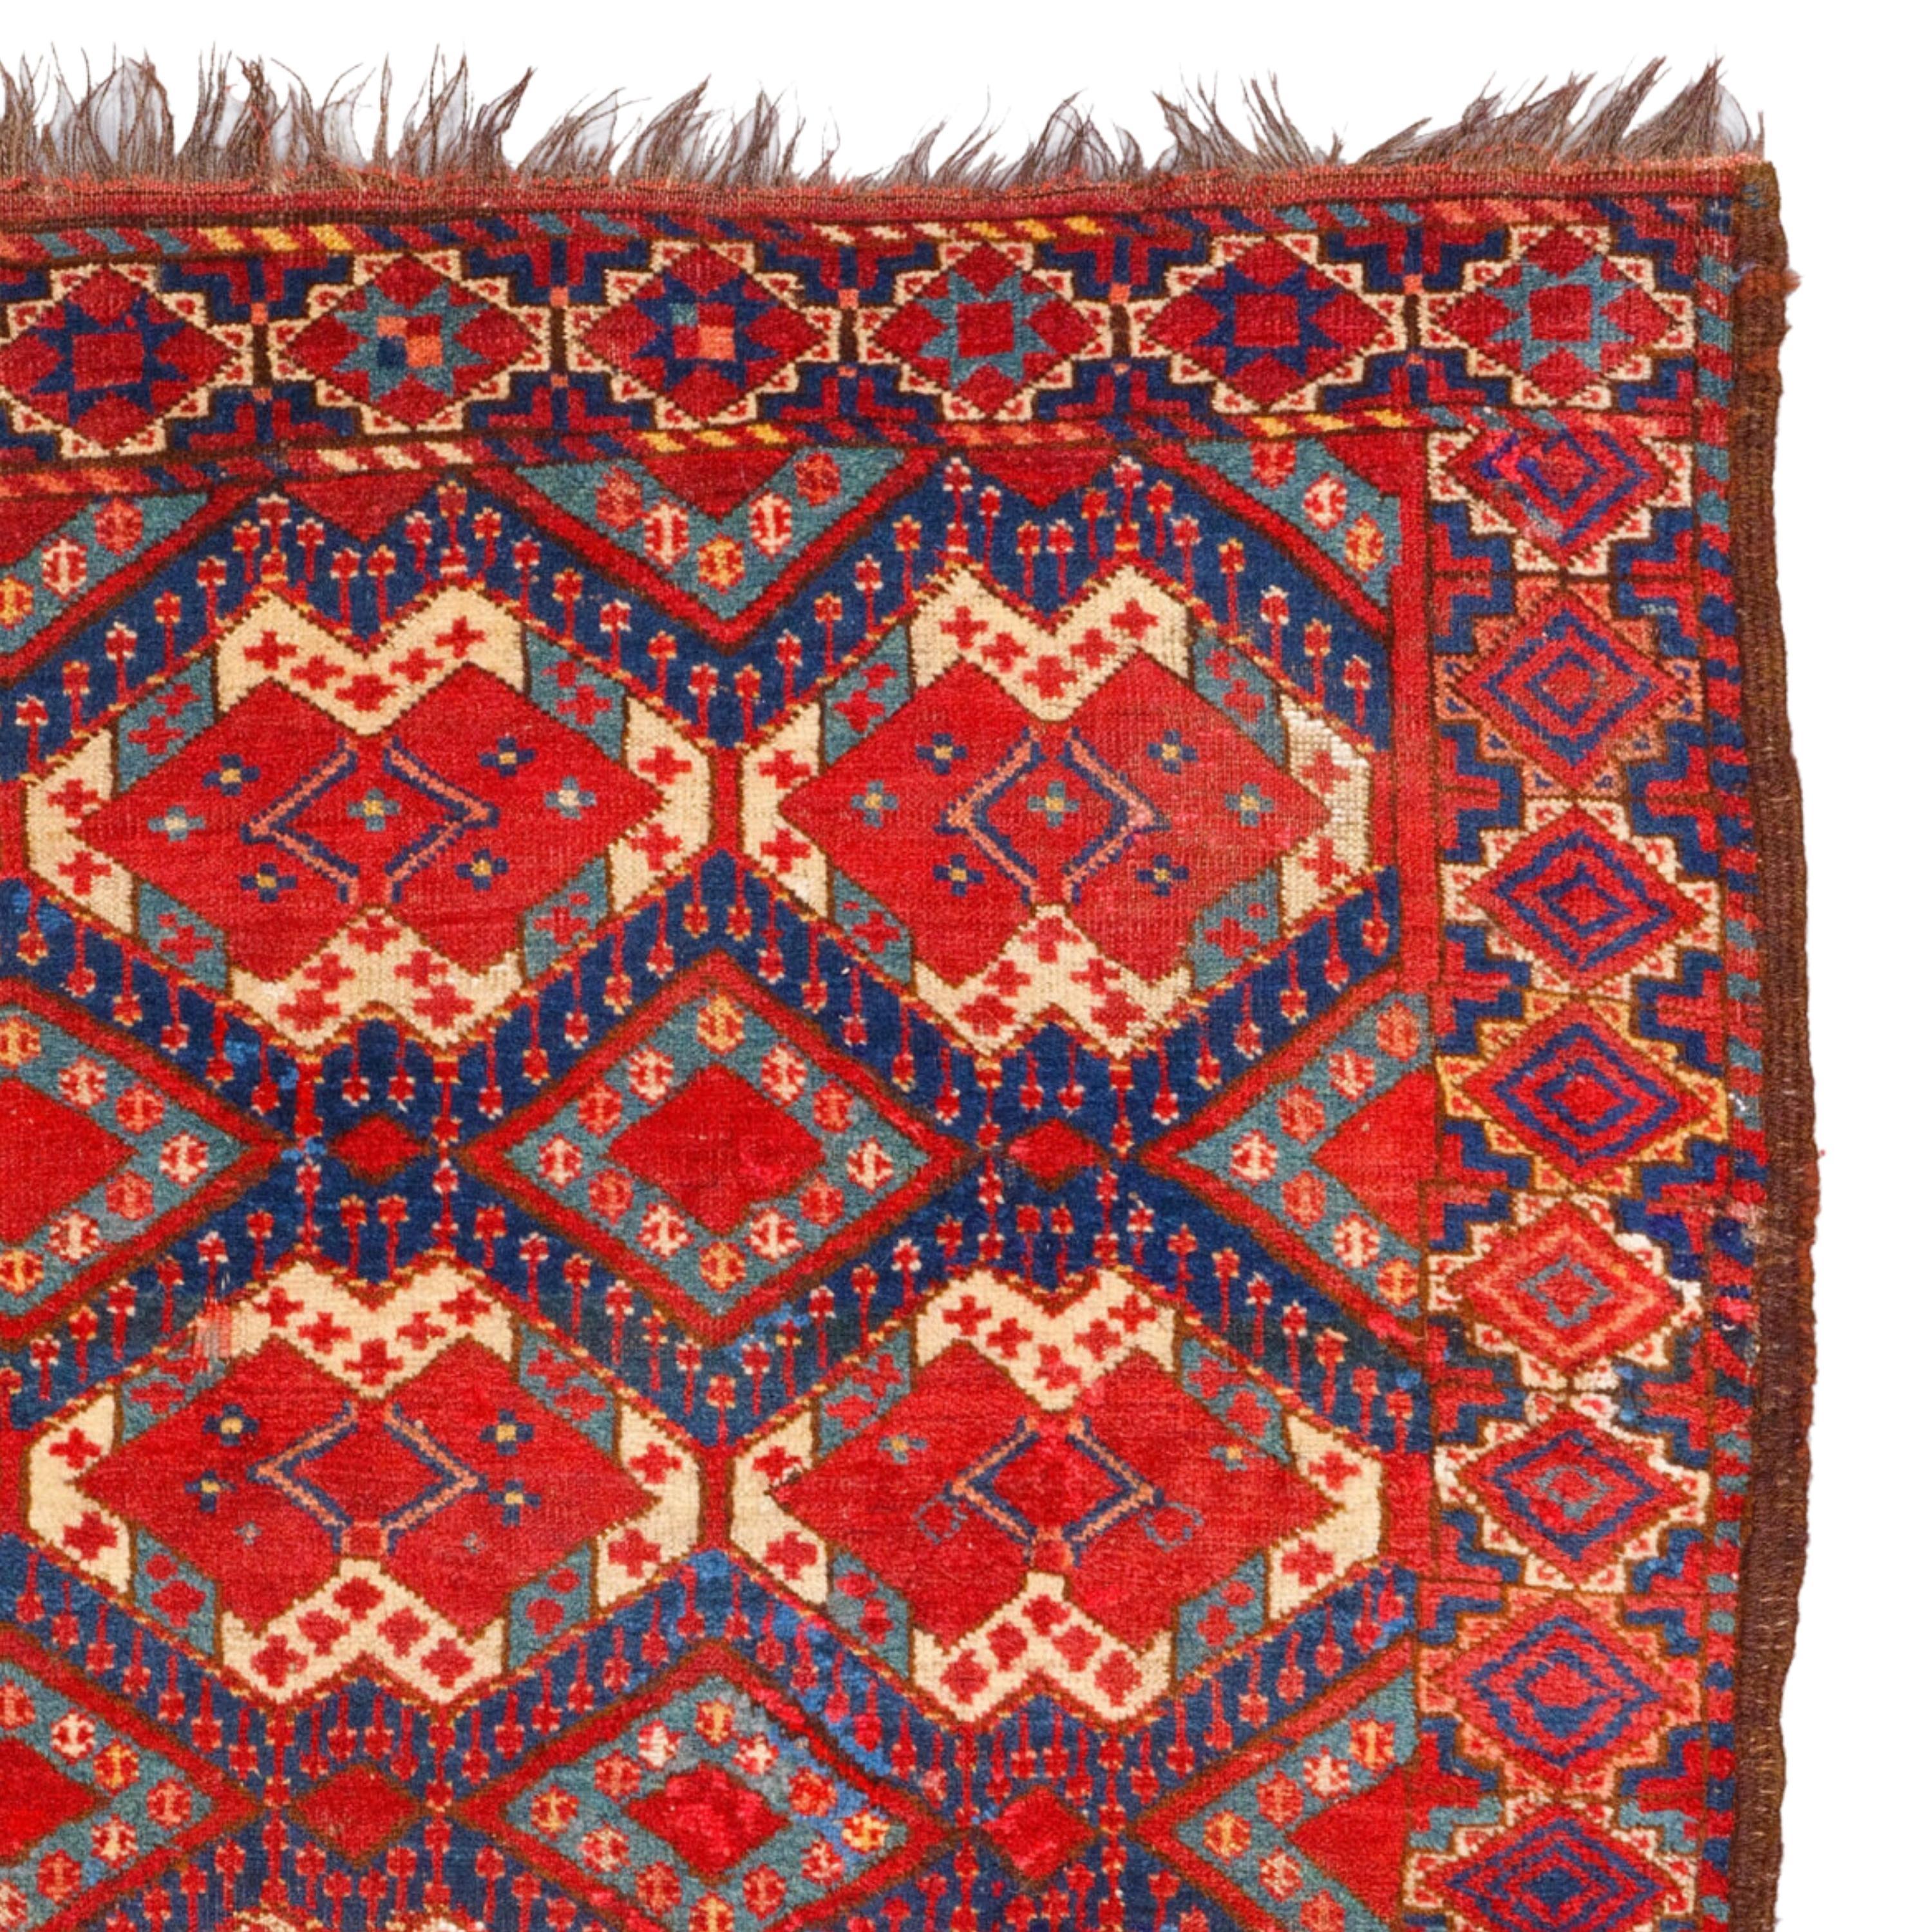 Antique Beshir Carpet - 19th Century Antique Beshir Engsi, Antique Rug In Good Condition For Sale In Sultanahmet, 34